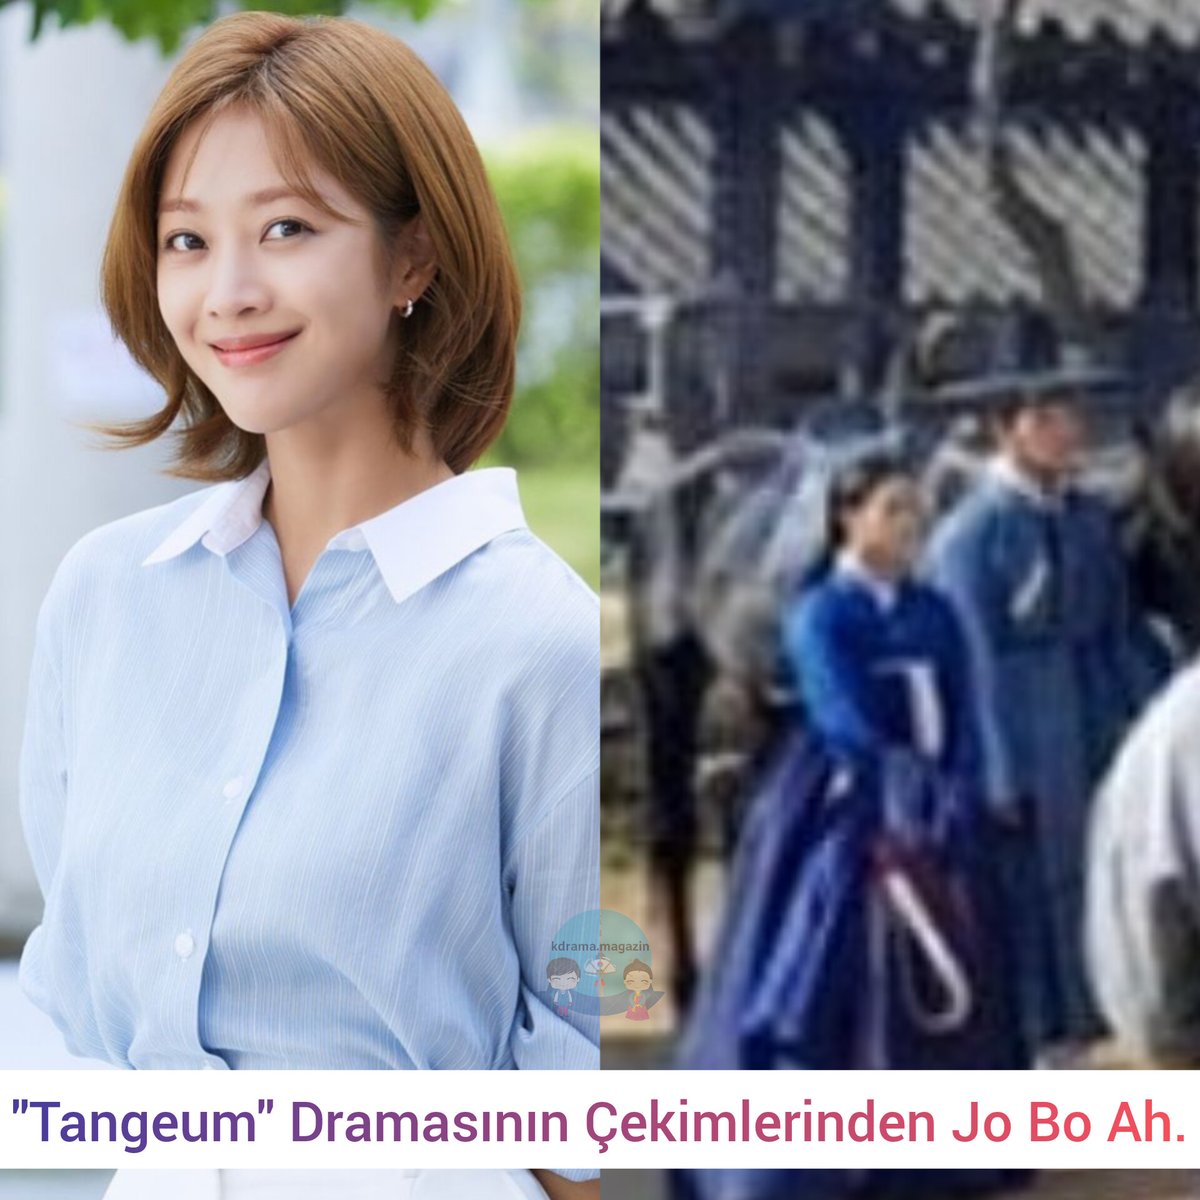 #Tangeum Dramasının Çekimlerinden #JoBoAh.

#LeeJaewook #JungGaram #UhmJiwon #ParkByungeun #KimJaewook